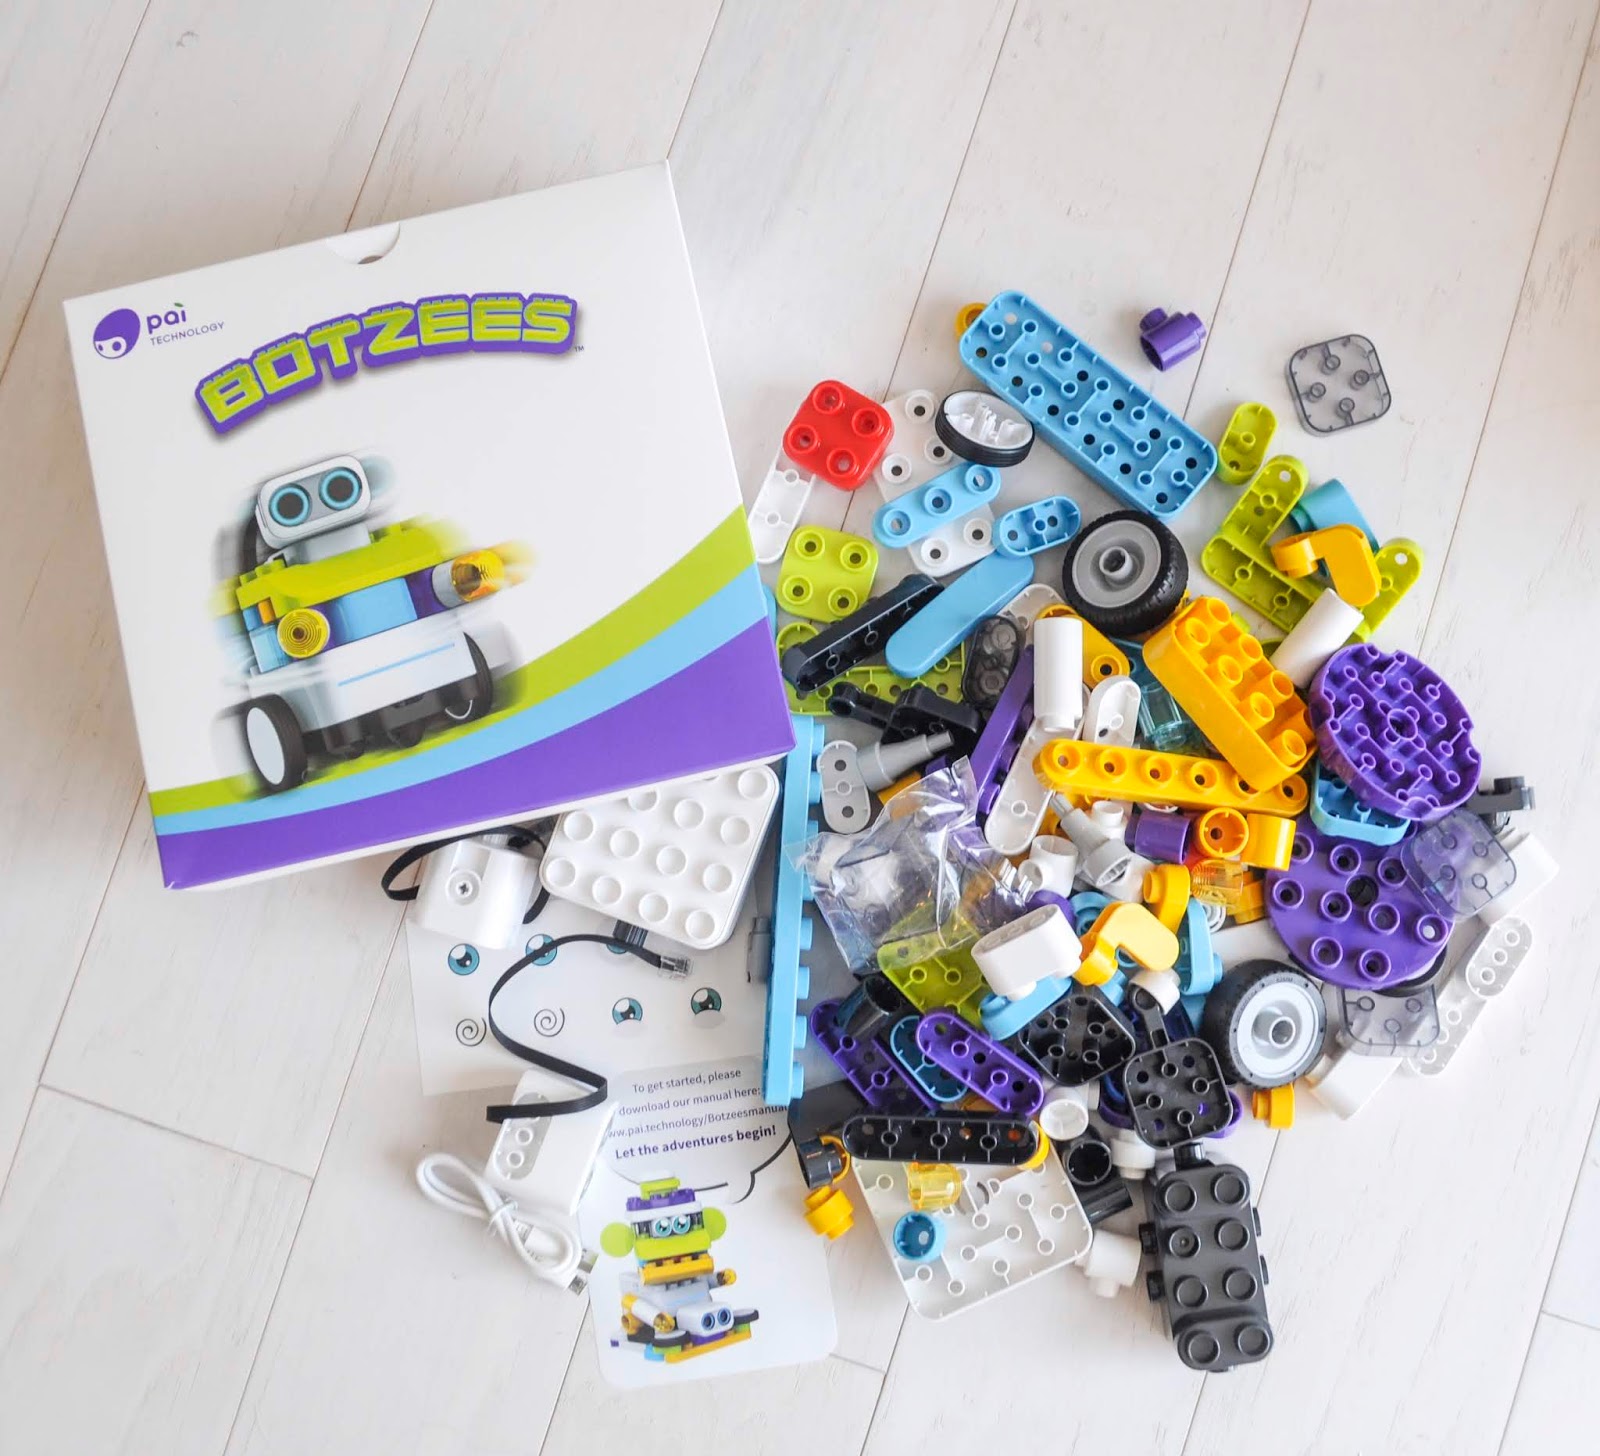 Best Kids Robot Toys - Botzees Coding & STEM Education Blocks